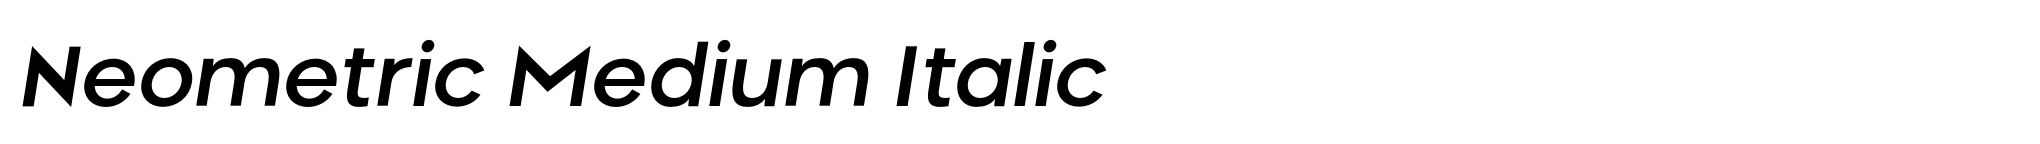 Neometric Medium Italic image